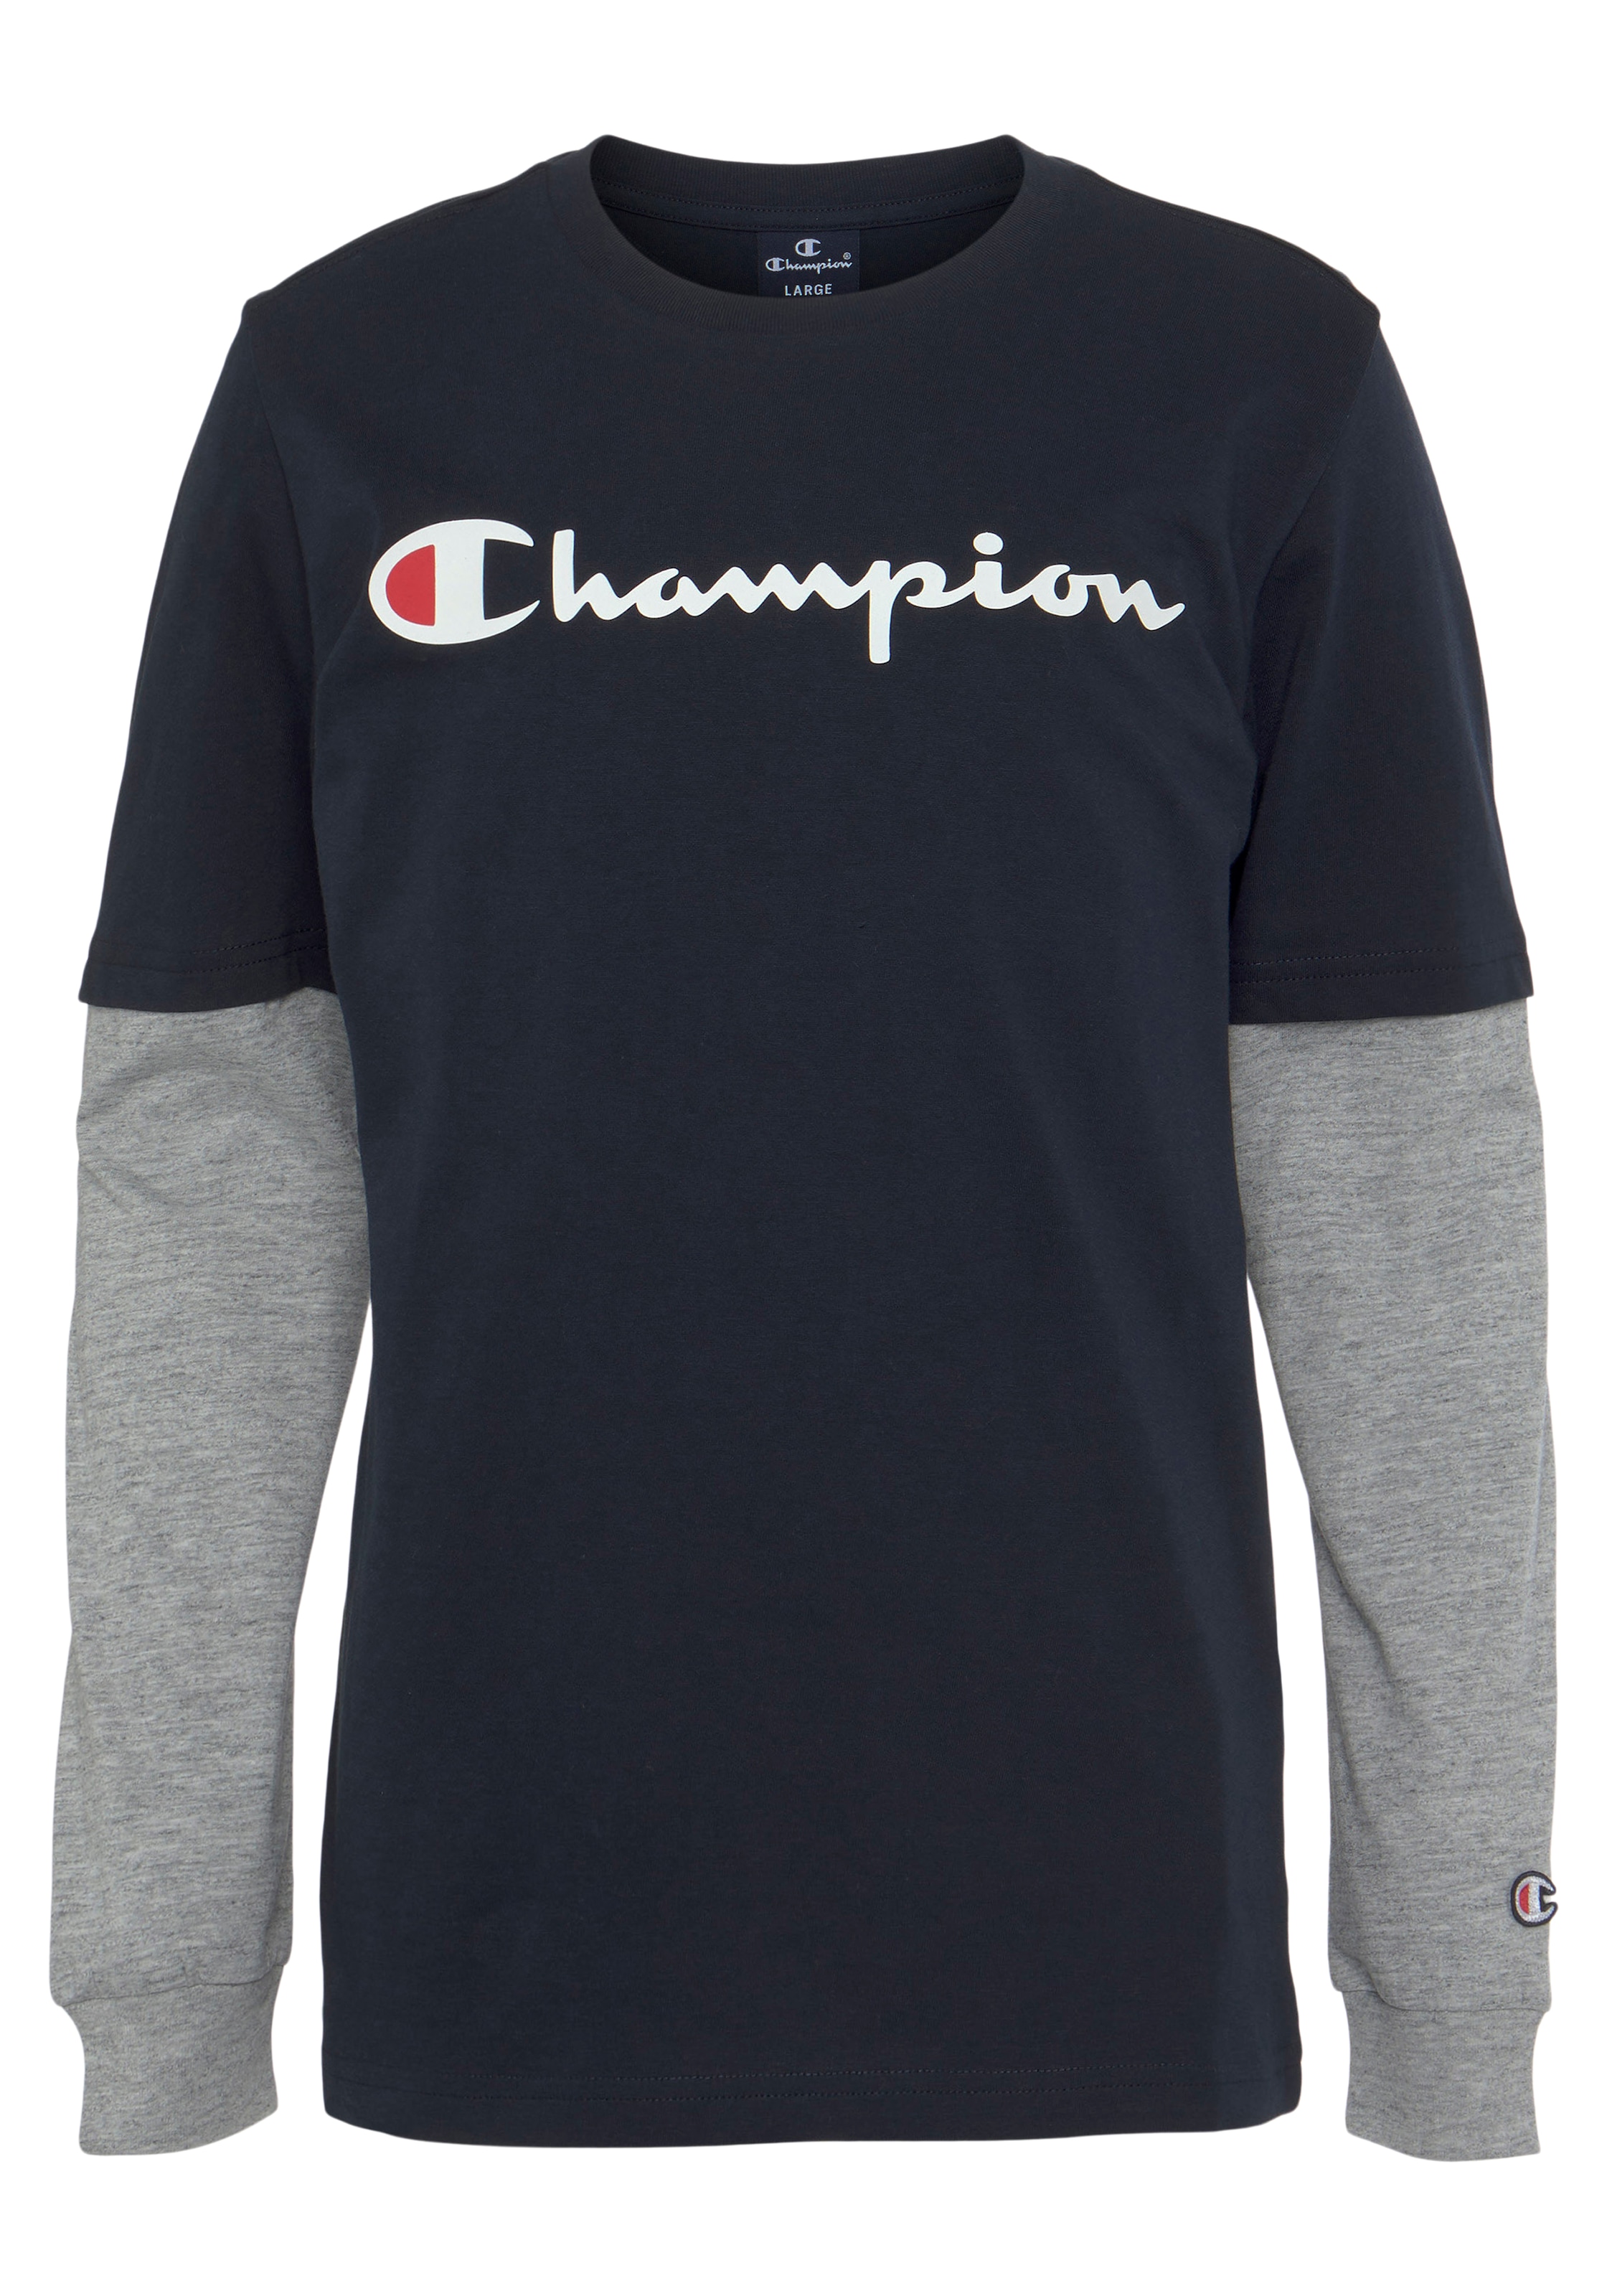 Kinder« Sleeve auf »Classic Long Langarmshirt - Entdecke Logo Champion large für